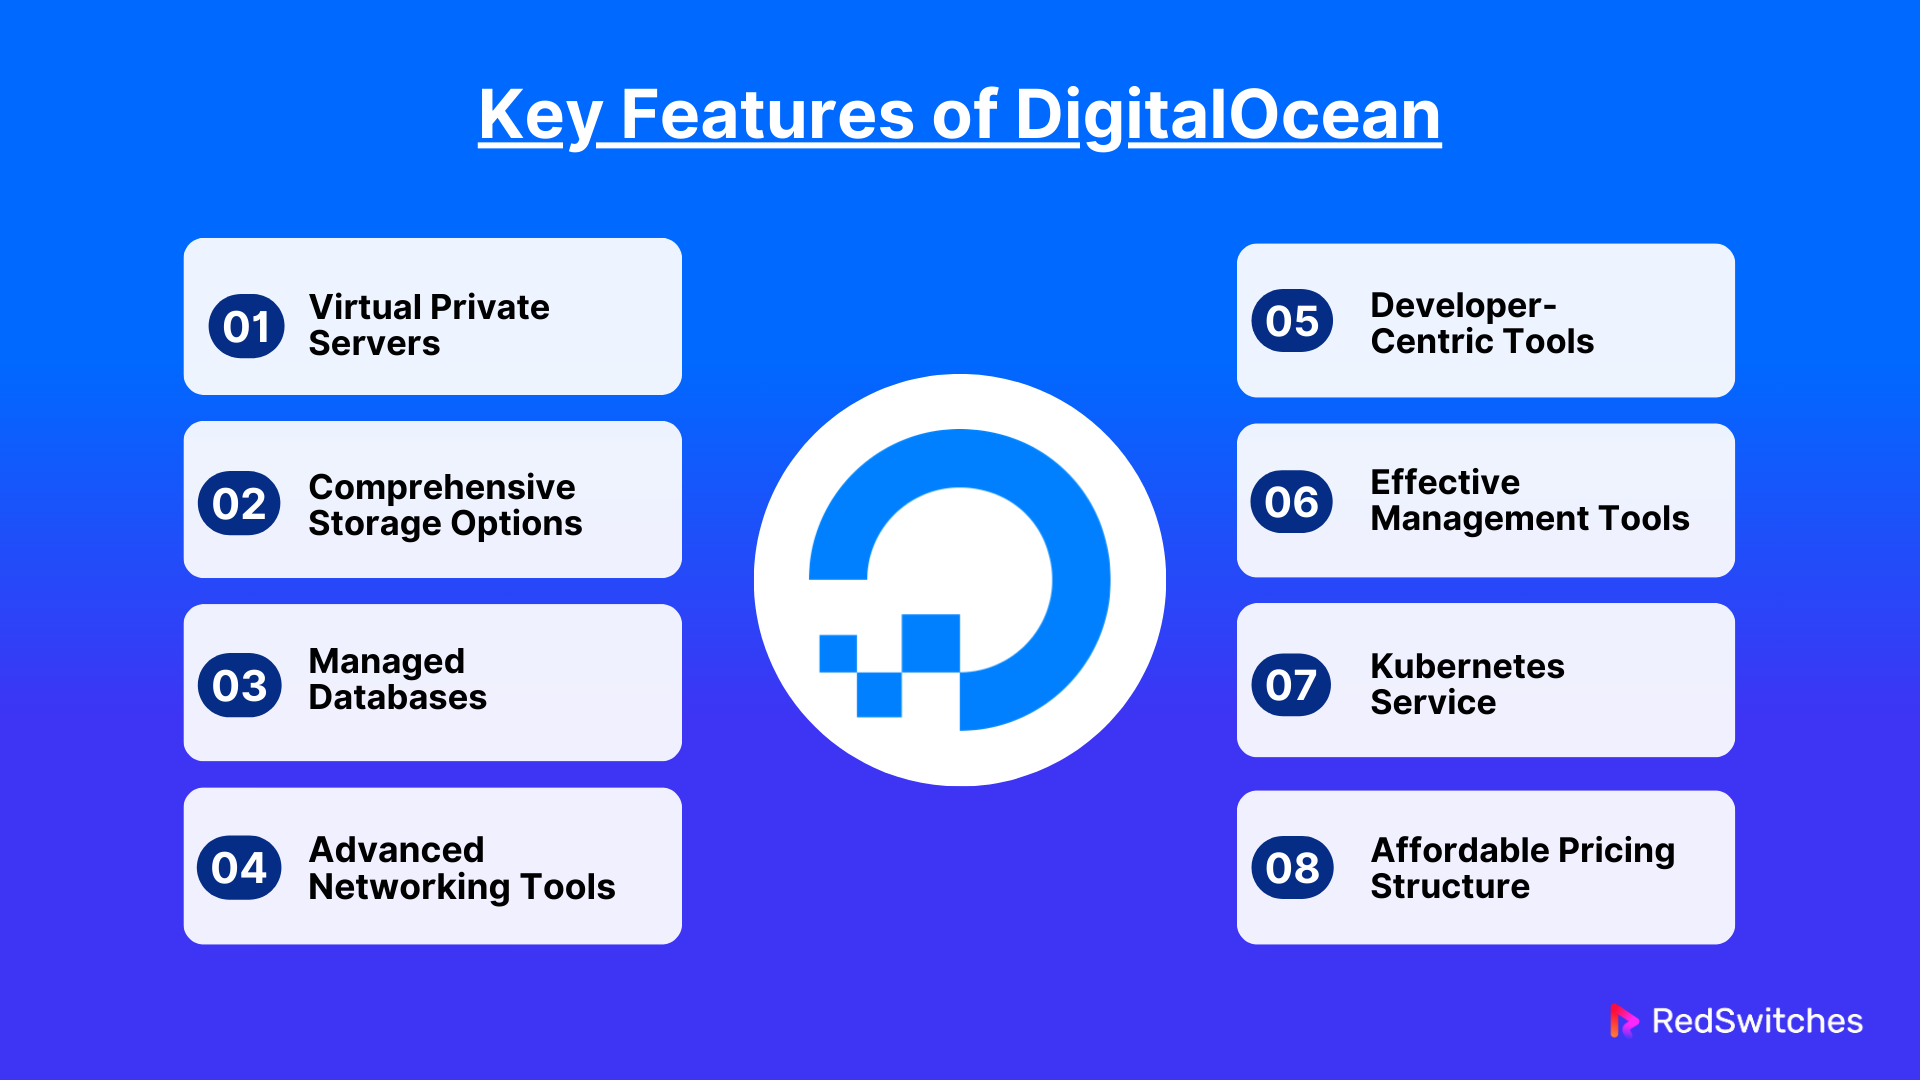 Key Features of DigitalOcean